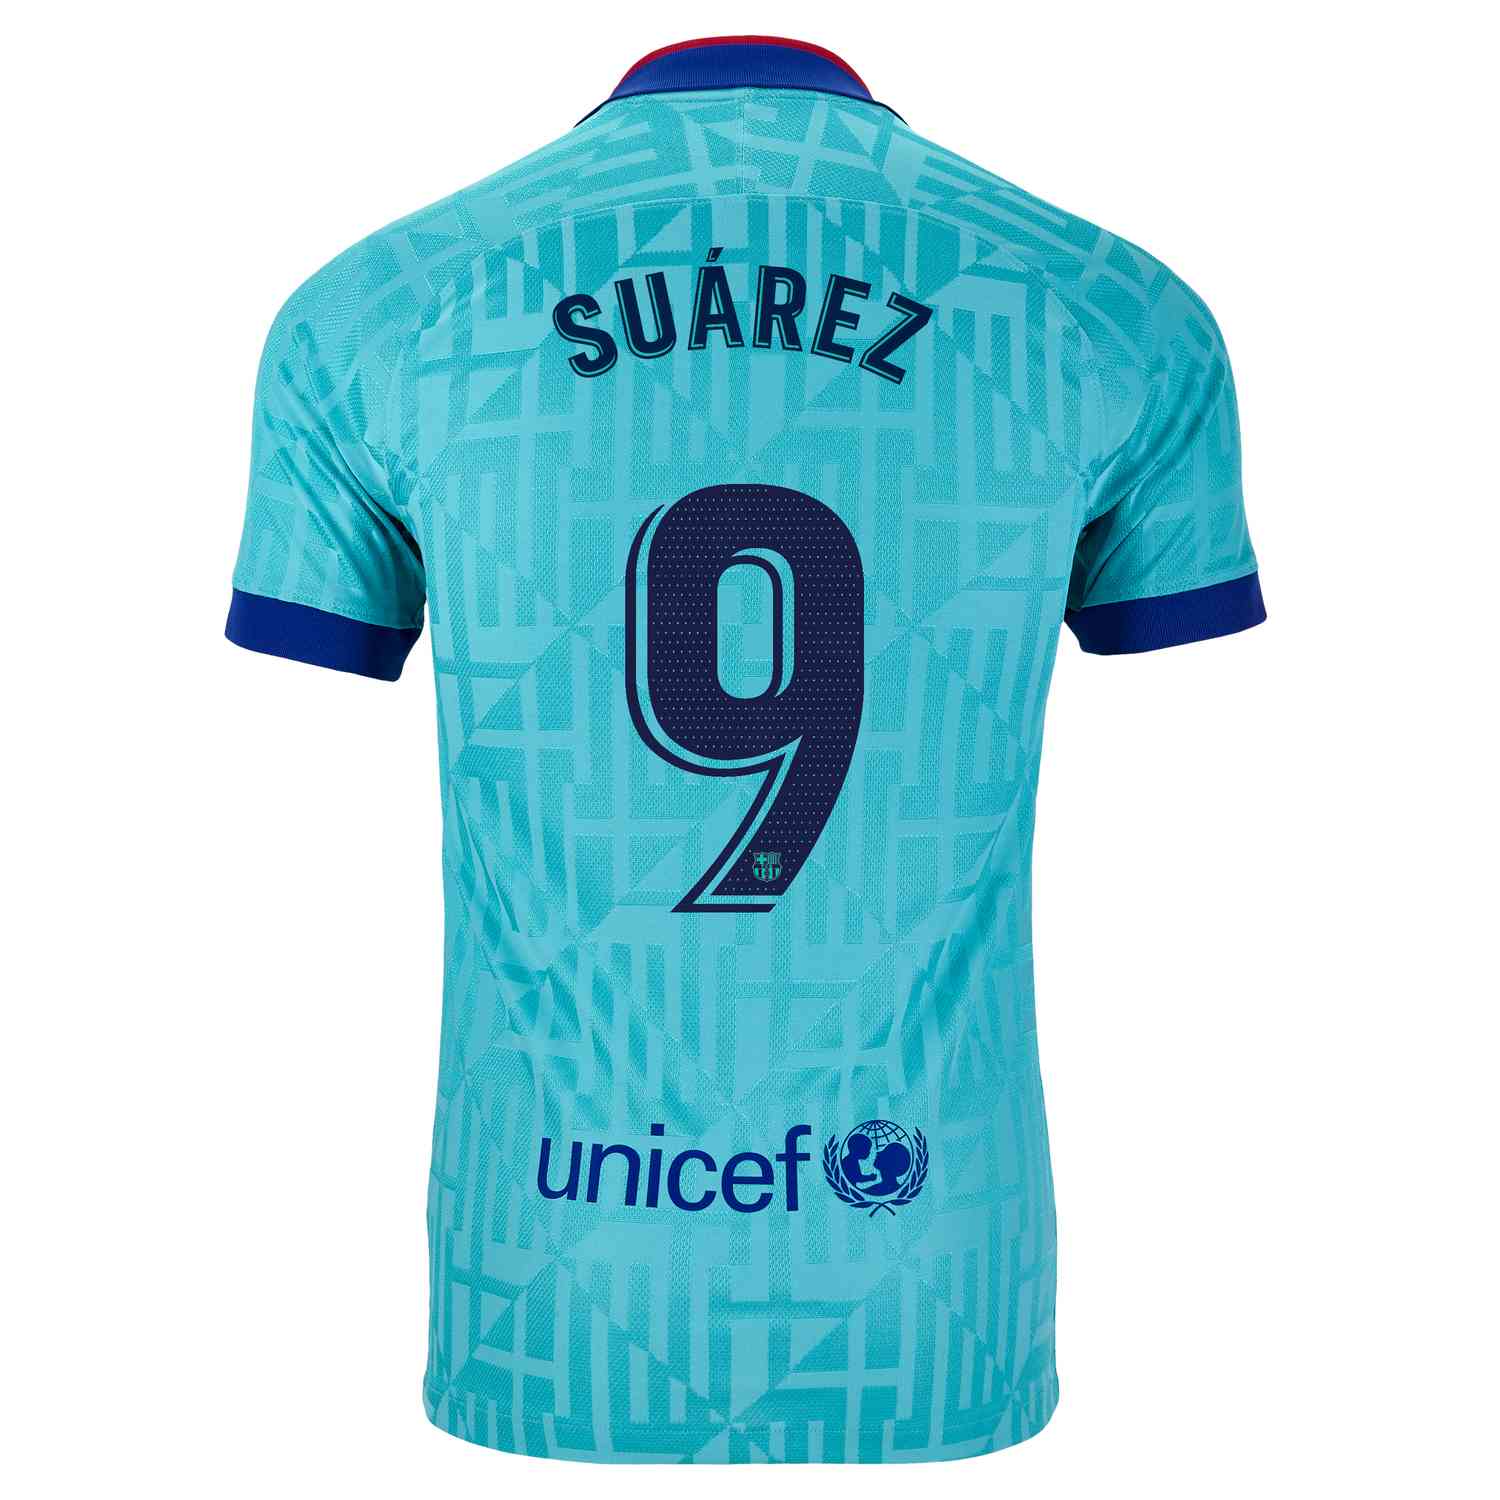 Luis Suarez Jersey - Suarez Soccer Jerseys and Gear